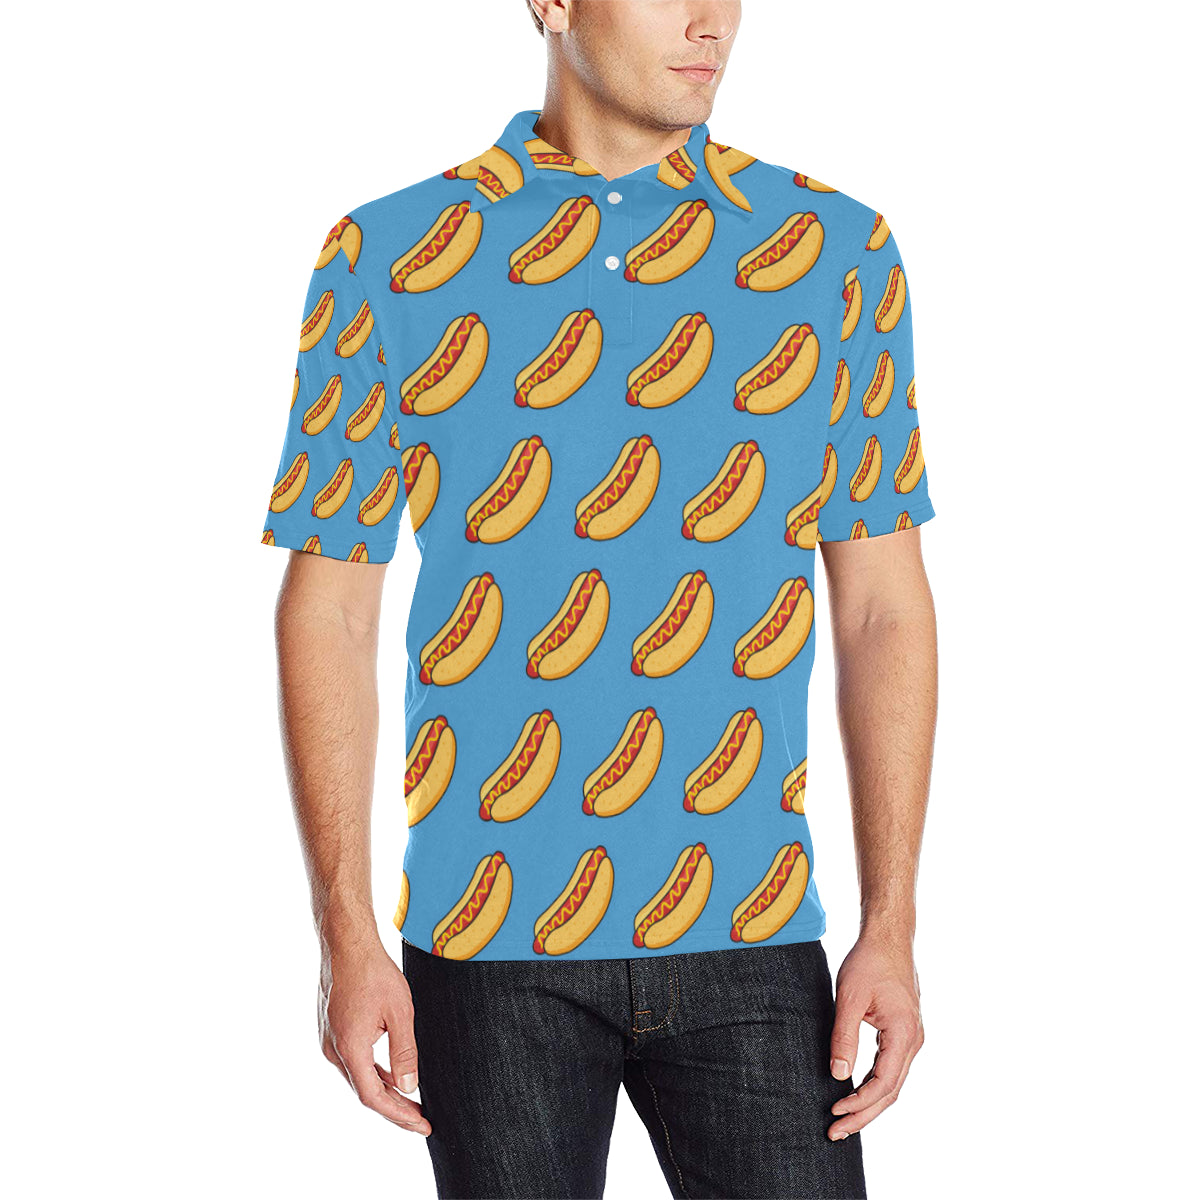 Hot Dog Pattern Print Design 02 Men Polo Shirt